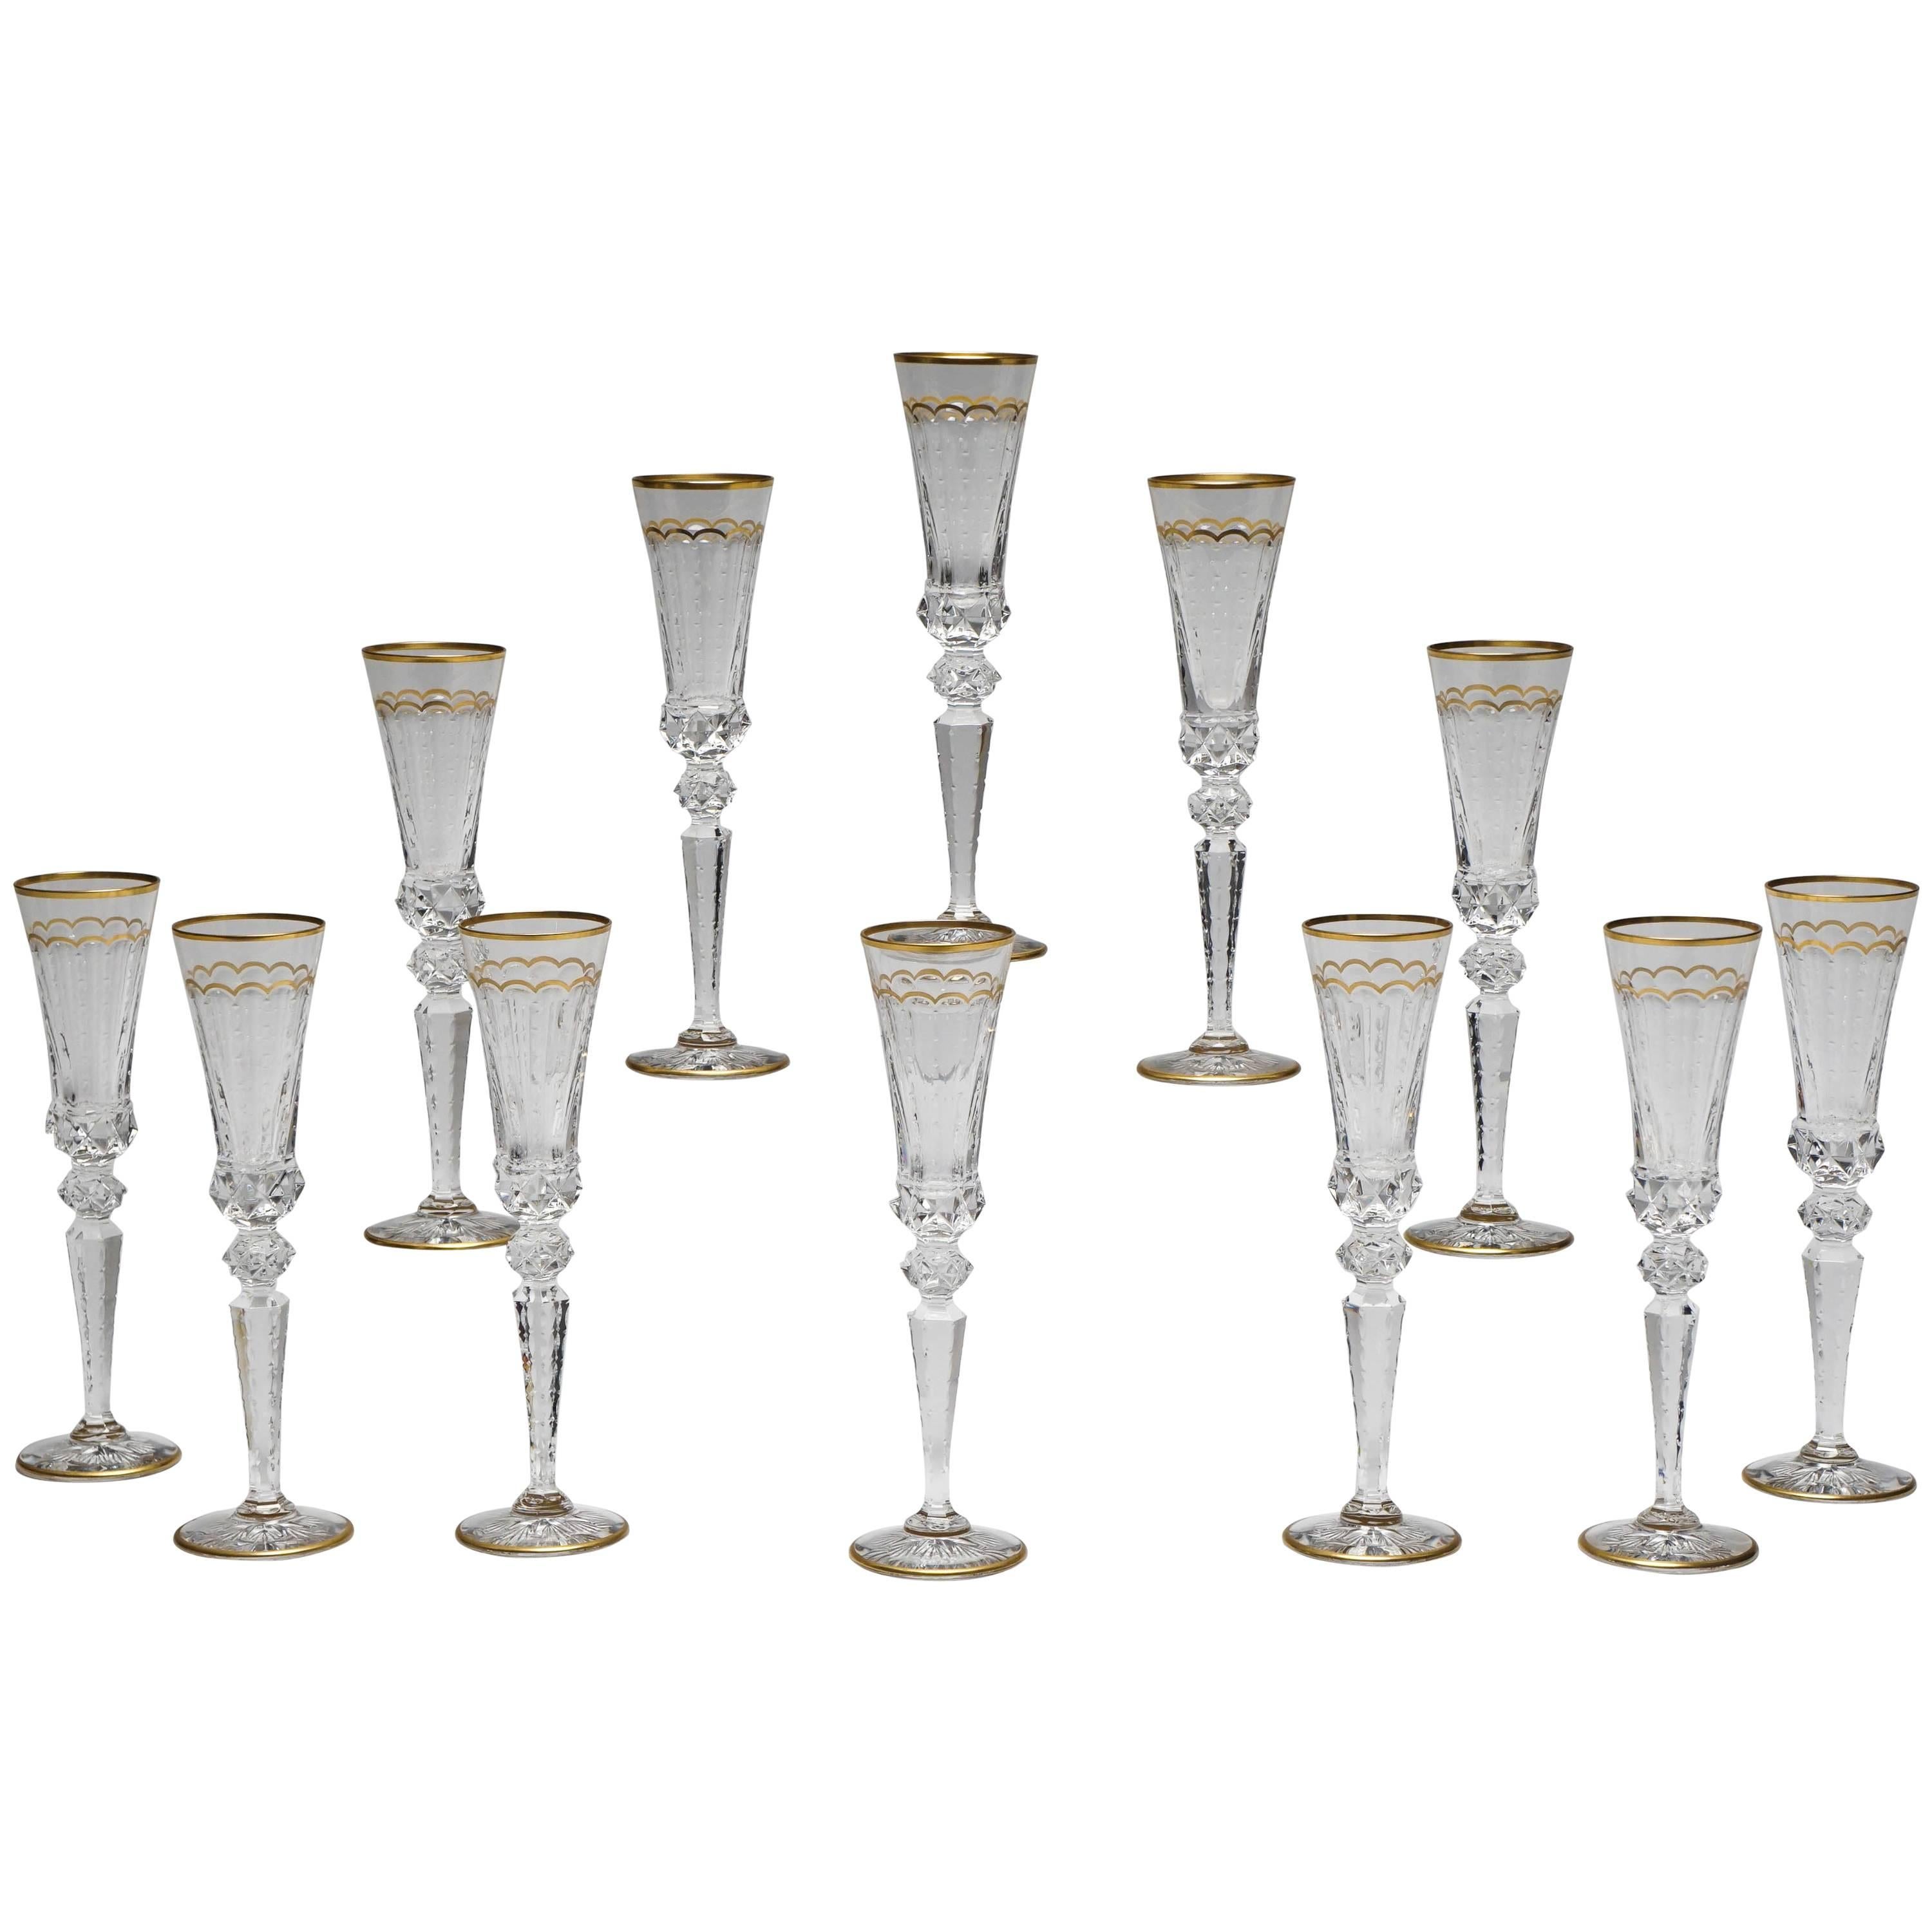 Set of 12 Signed Saint Louis "Excellence" Champagne Flutes